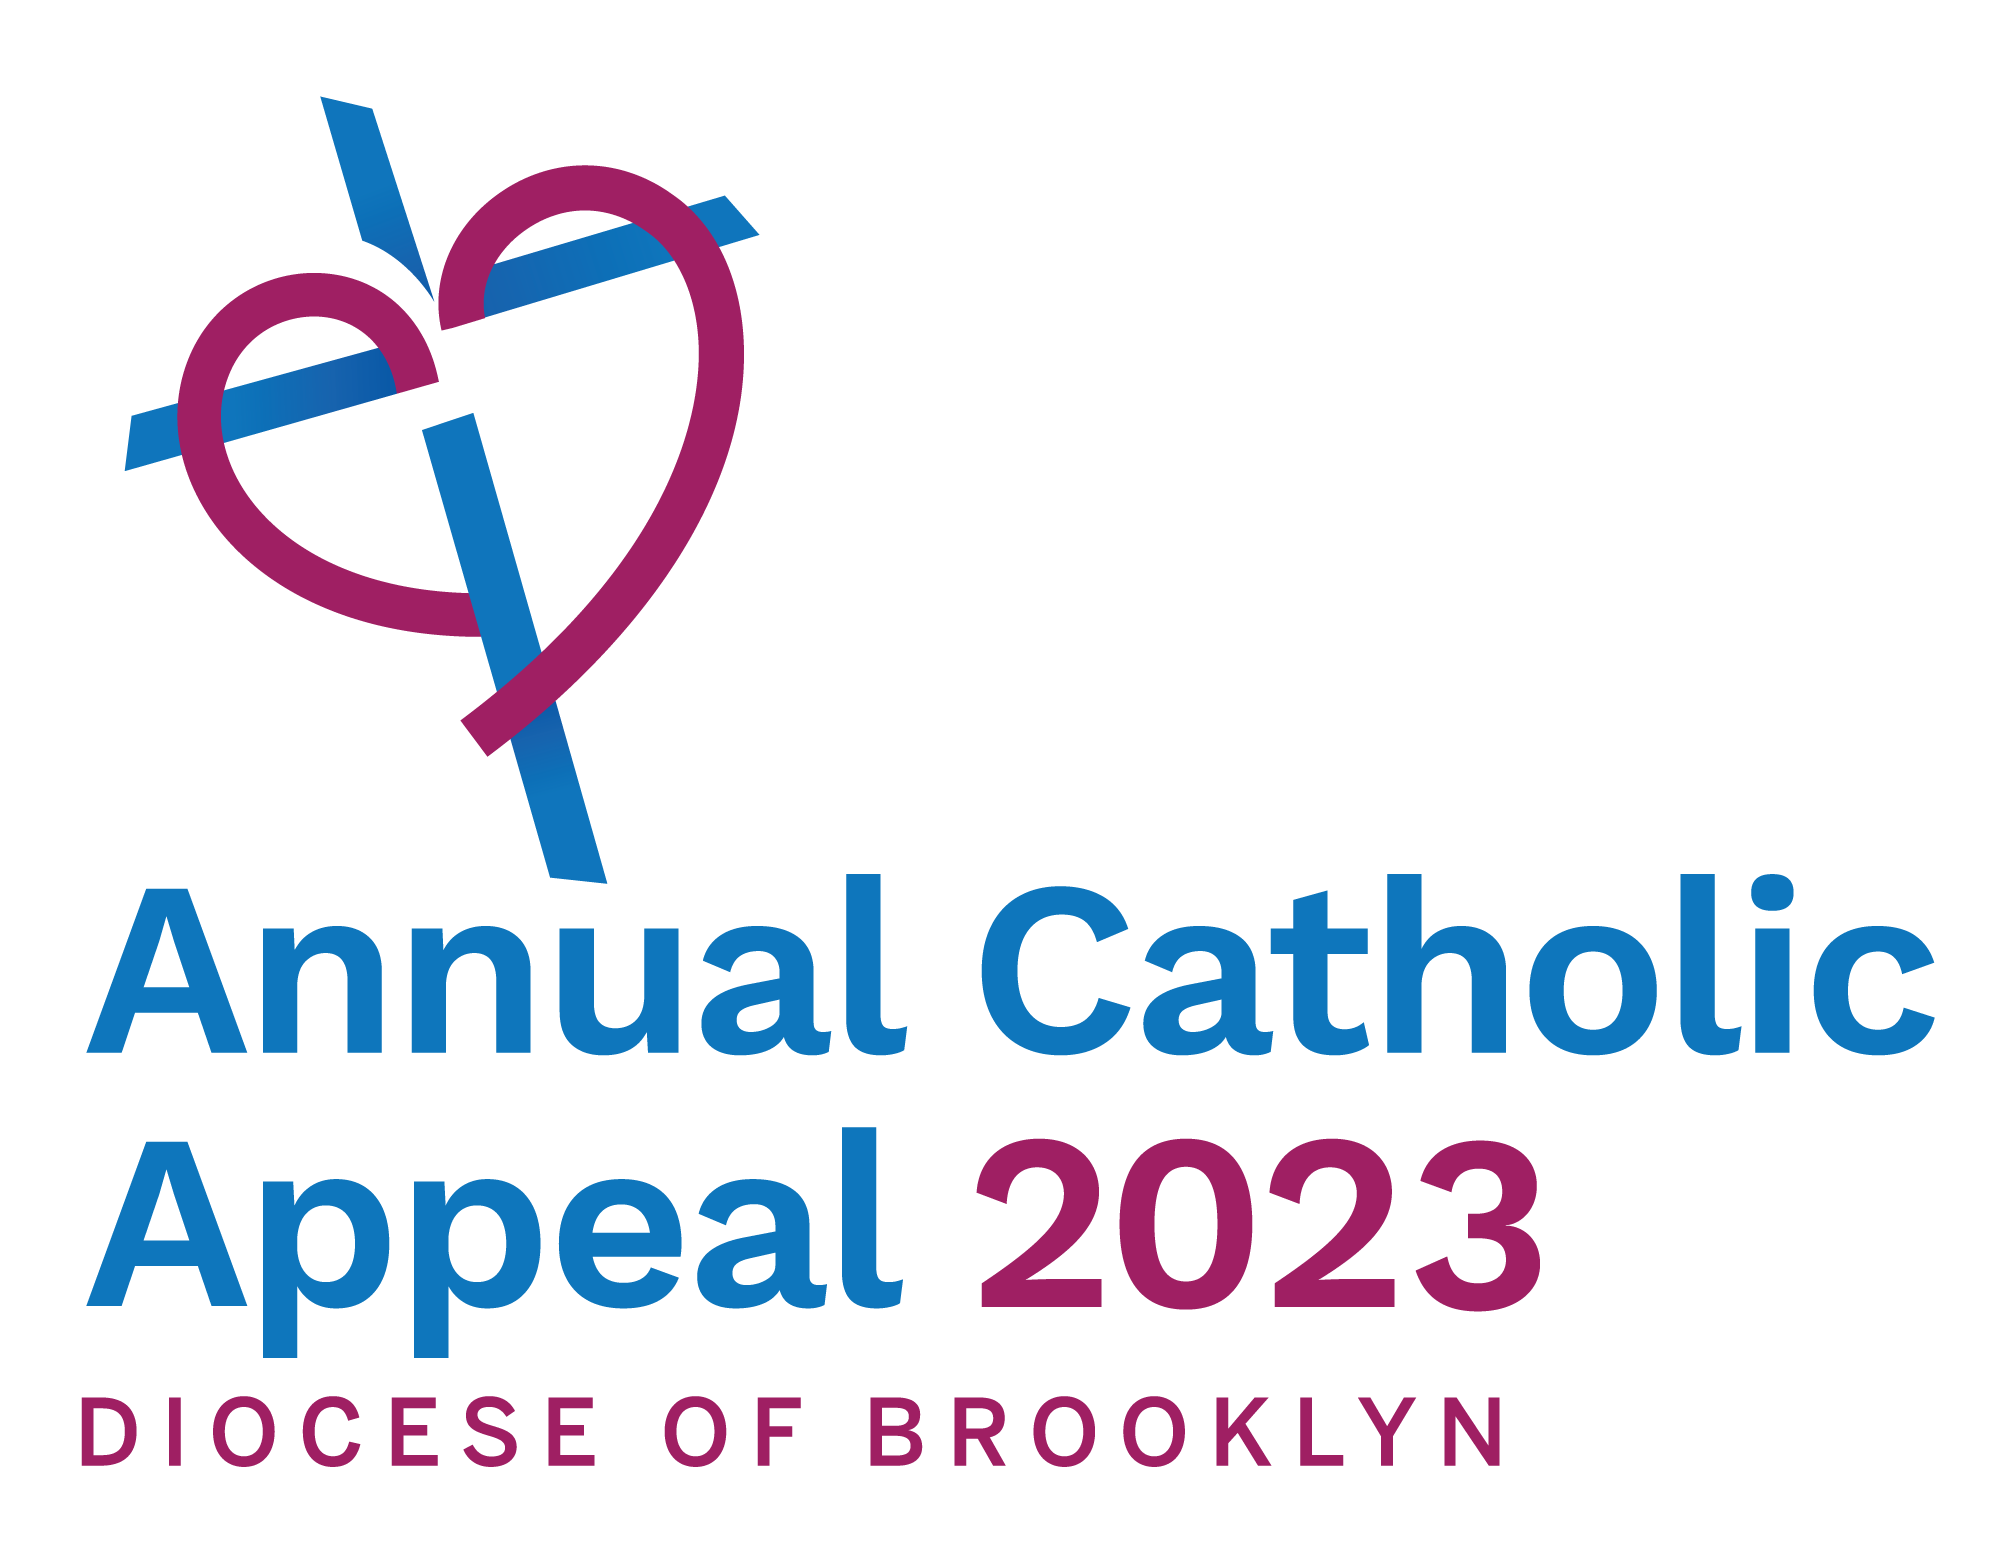 Annual Catholic Appeal 2023 logo